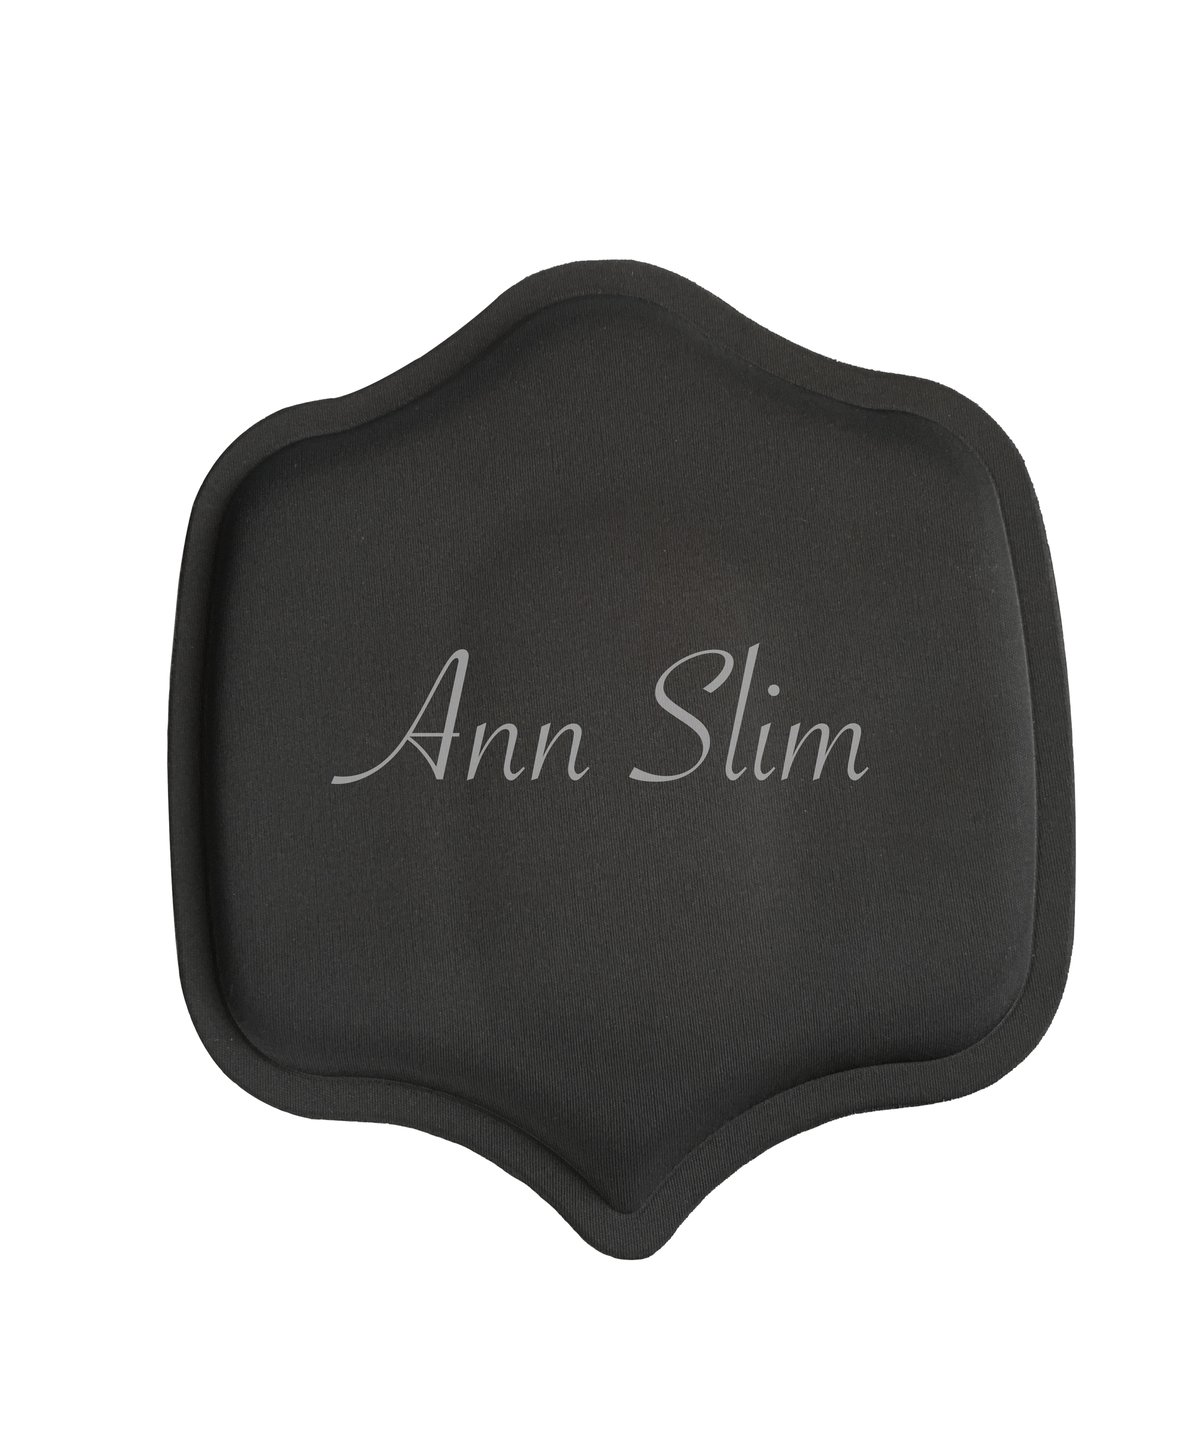 Ann Slim 530 Abdominal Board After Liposuction, Tummy Tuck